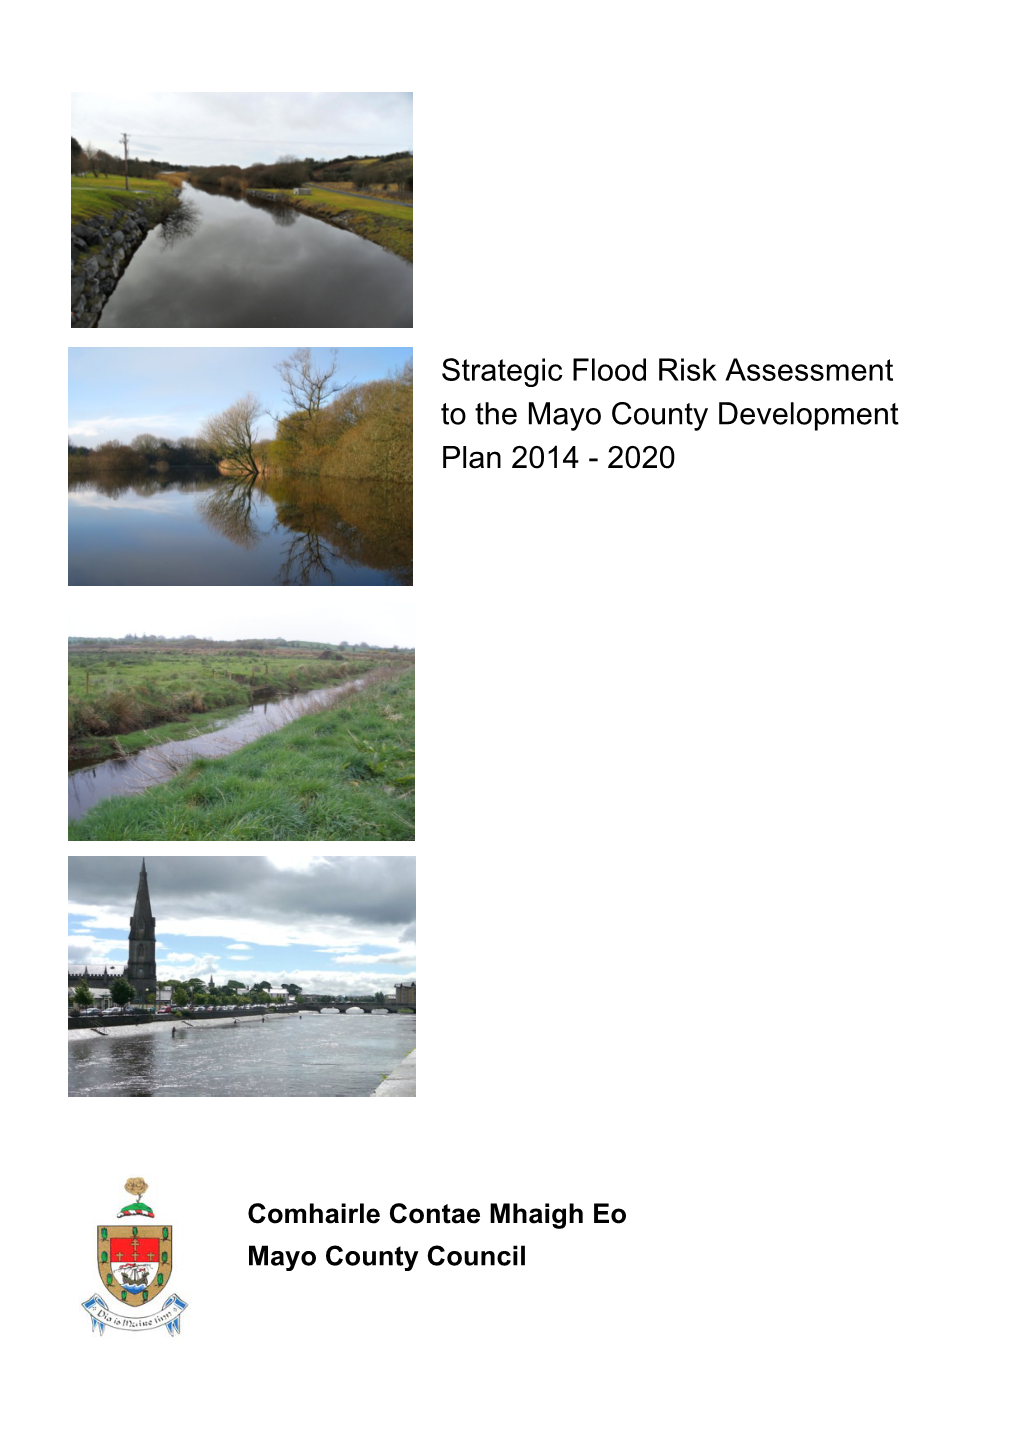 Strategic Flood Risk Assessment to the Mayo County Development Plan 2014 - 2020